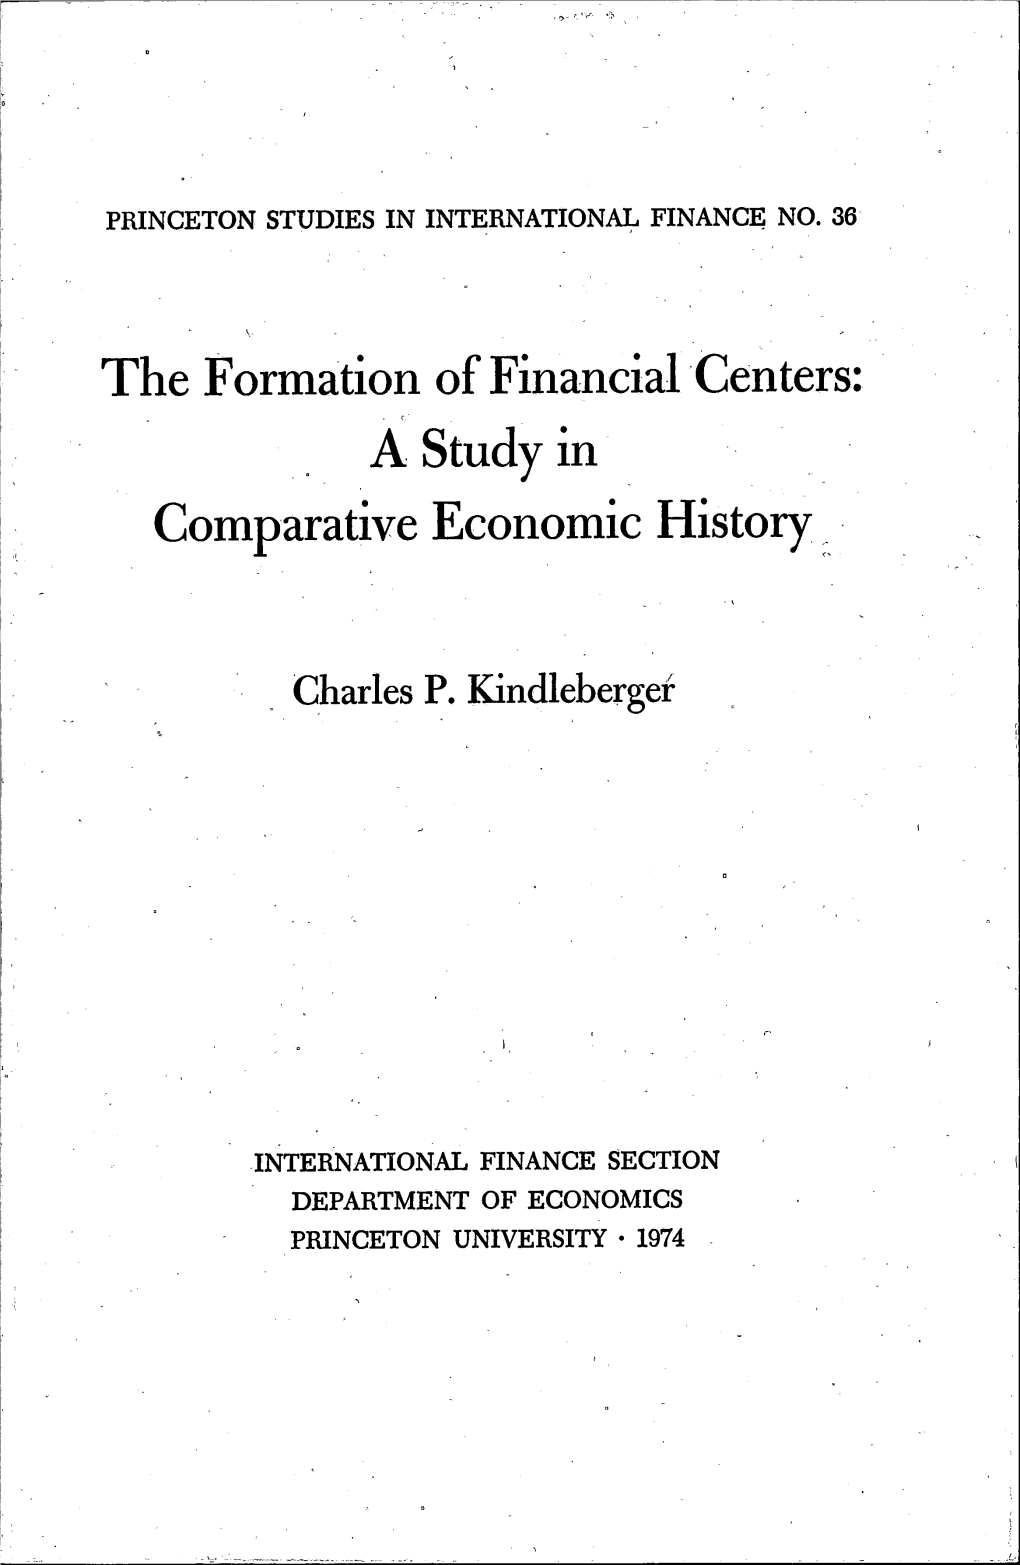 A Study in Comparative Economic History